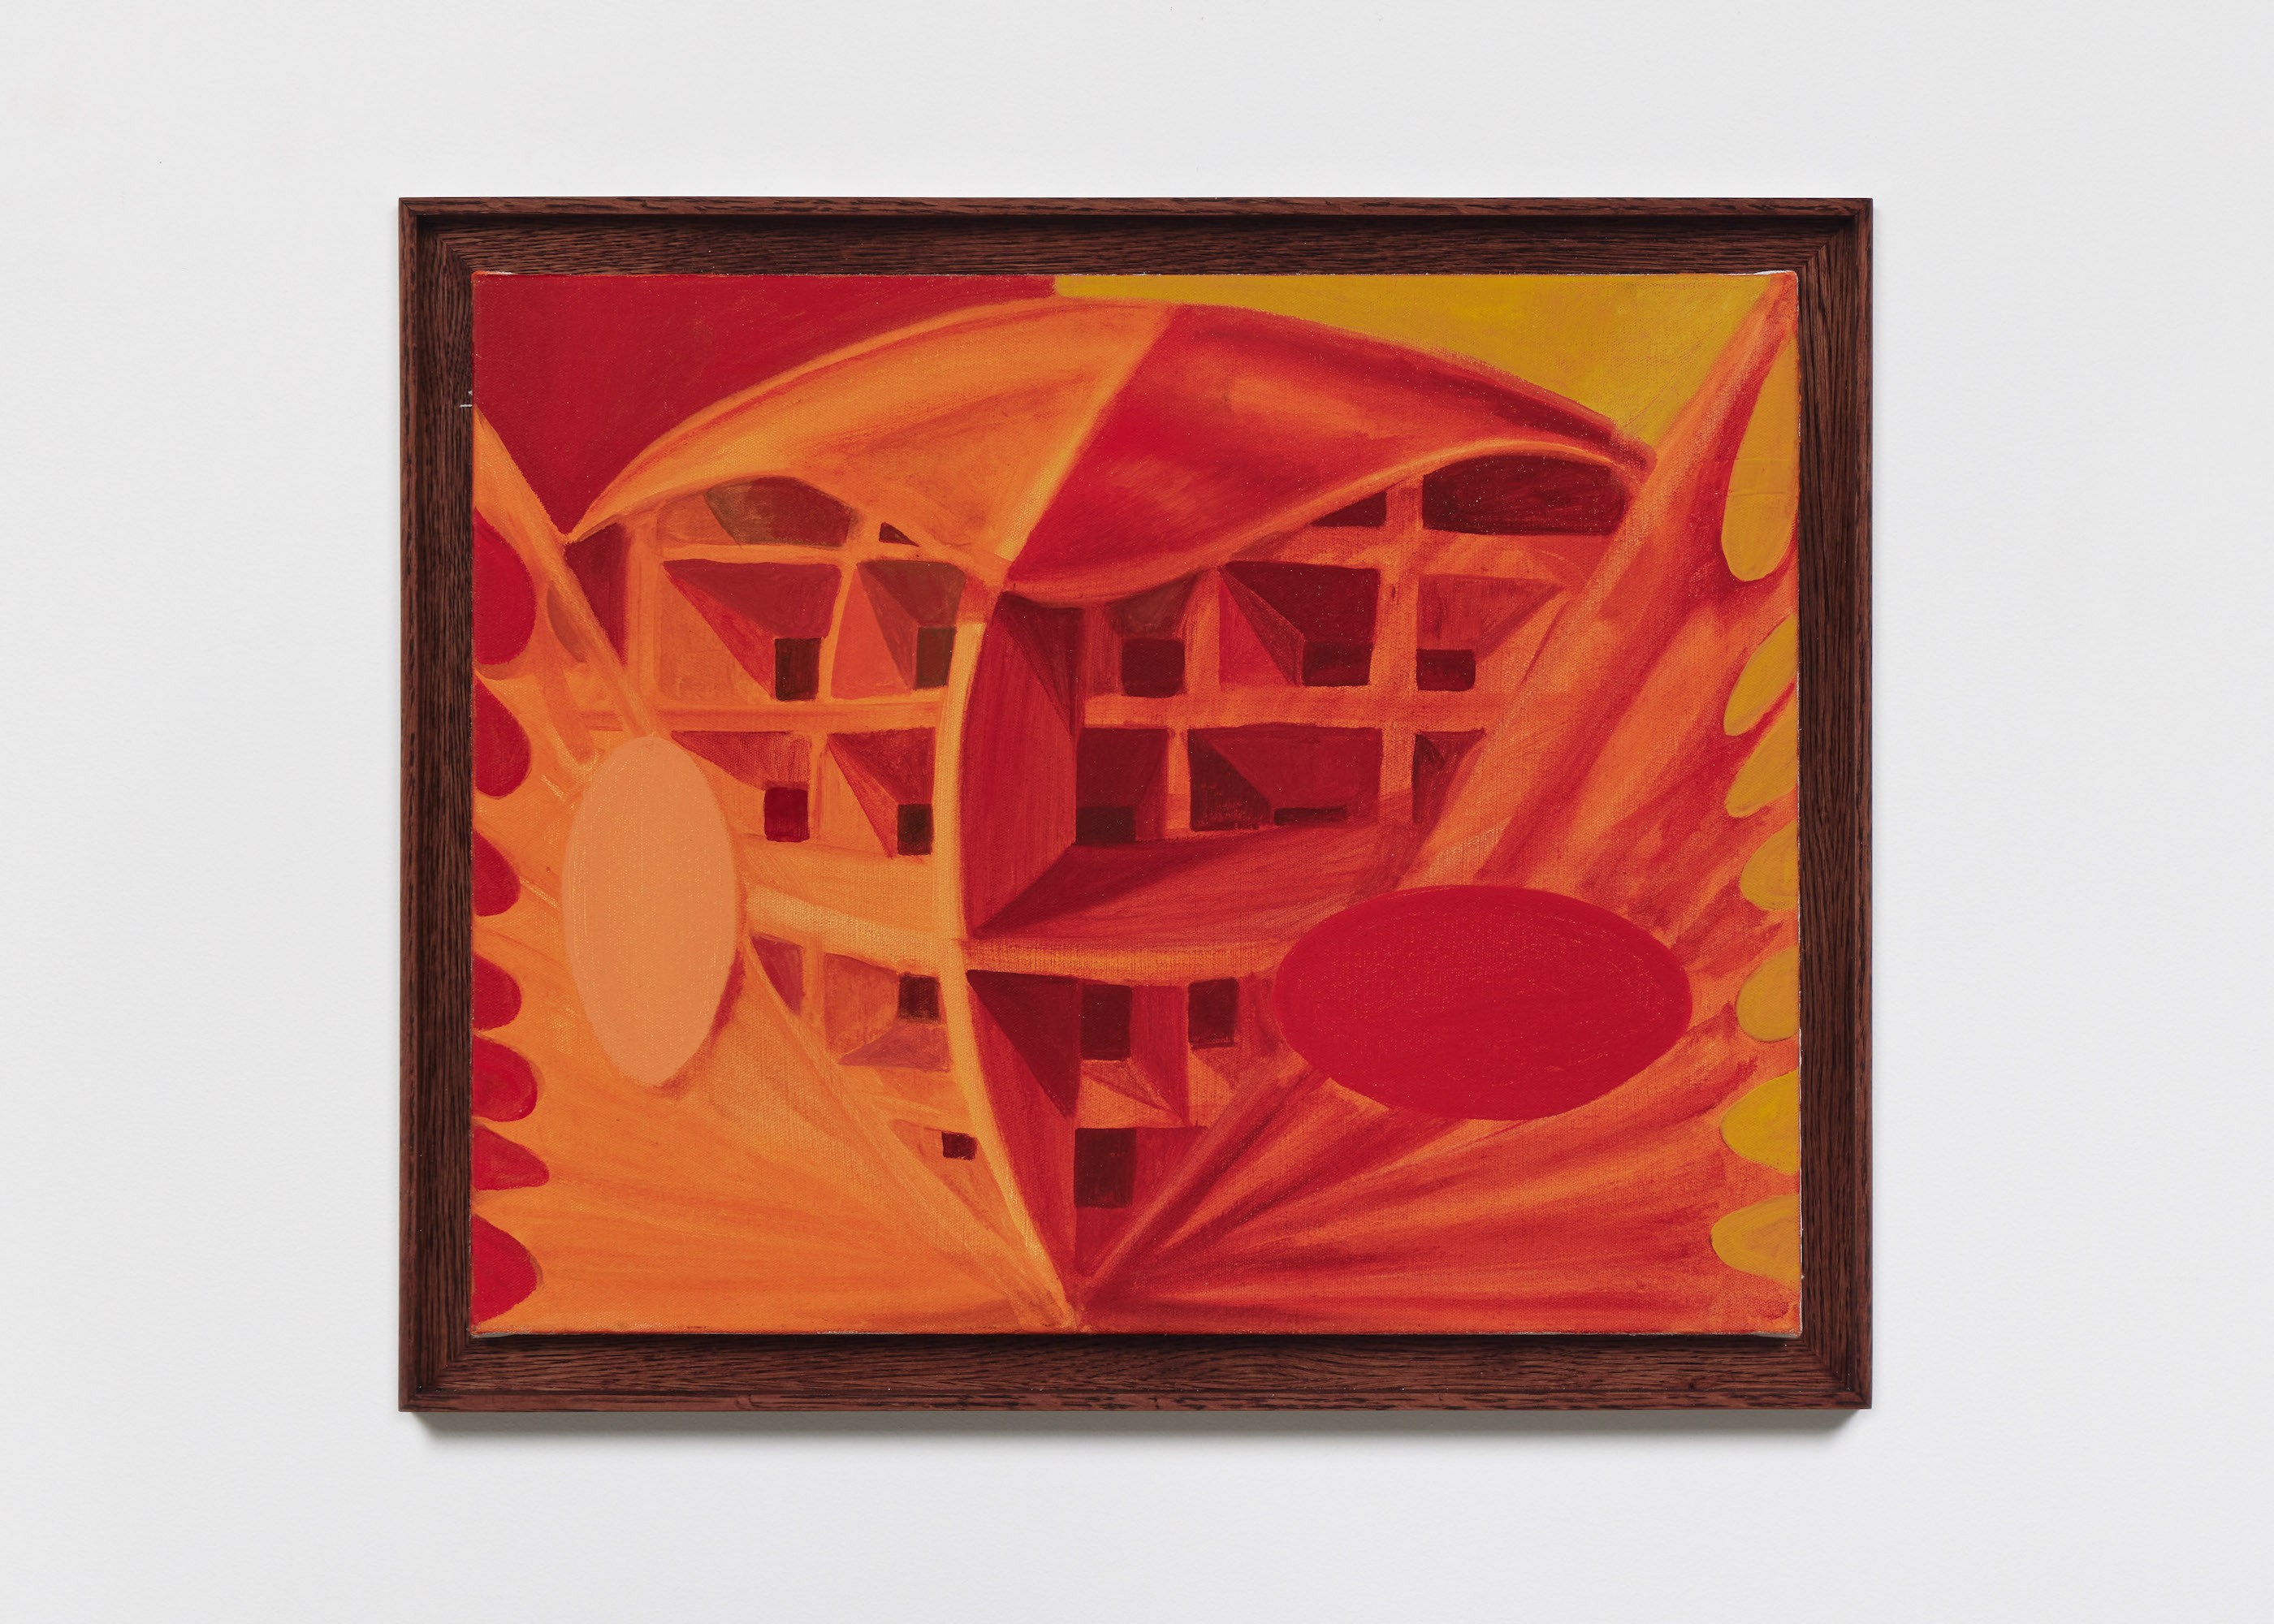 (17) Sean Steadman, Lattice head, 2023, oil on canvas, framed, 46.3 x 57 x 3.7 cm, unique